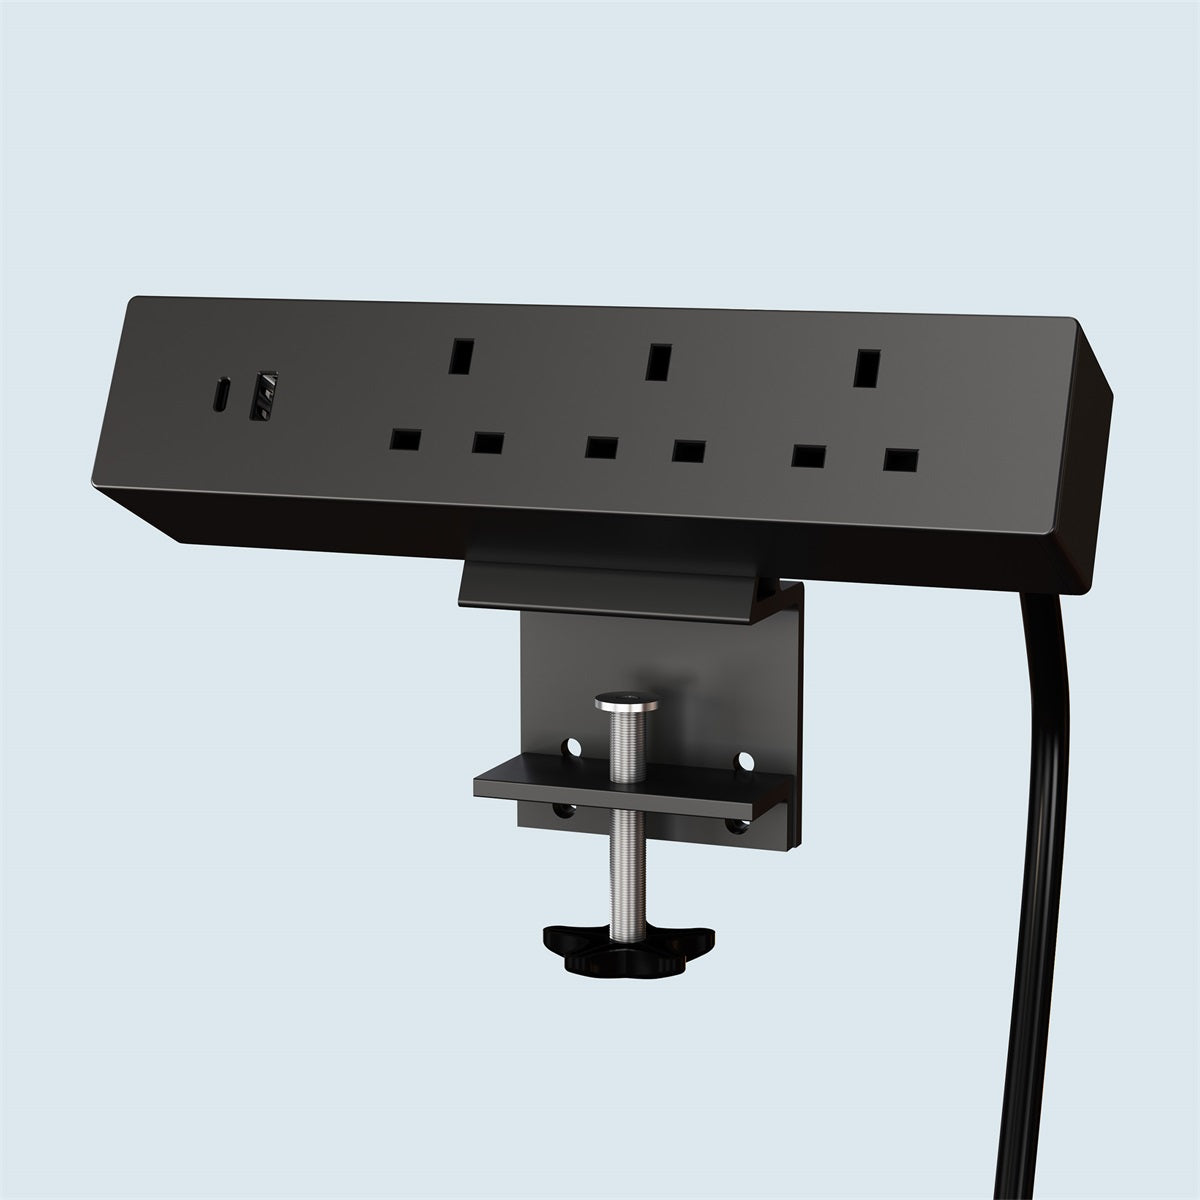 Maidesite desk power strip with USB port black